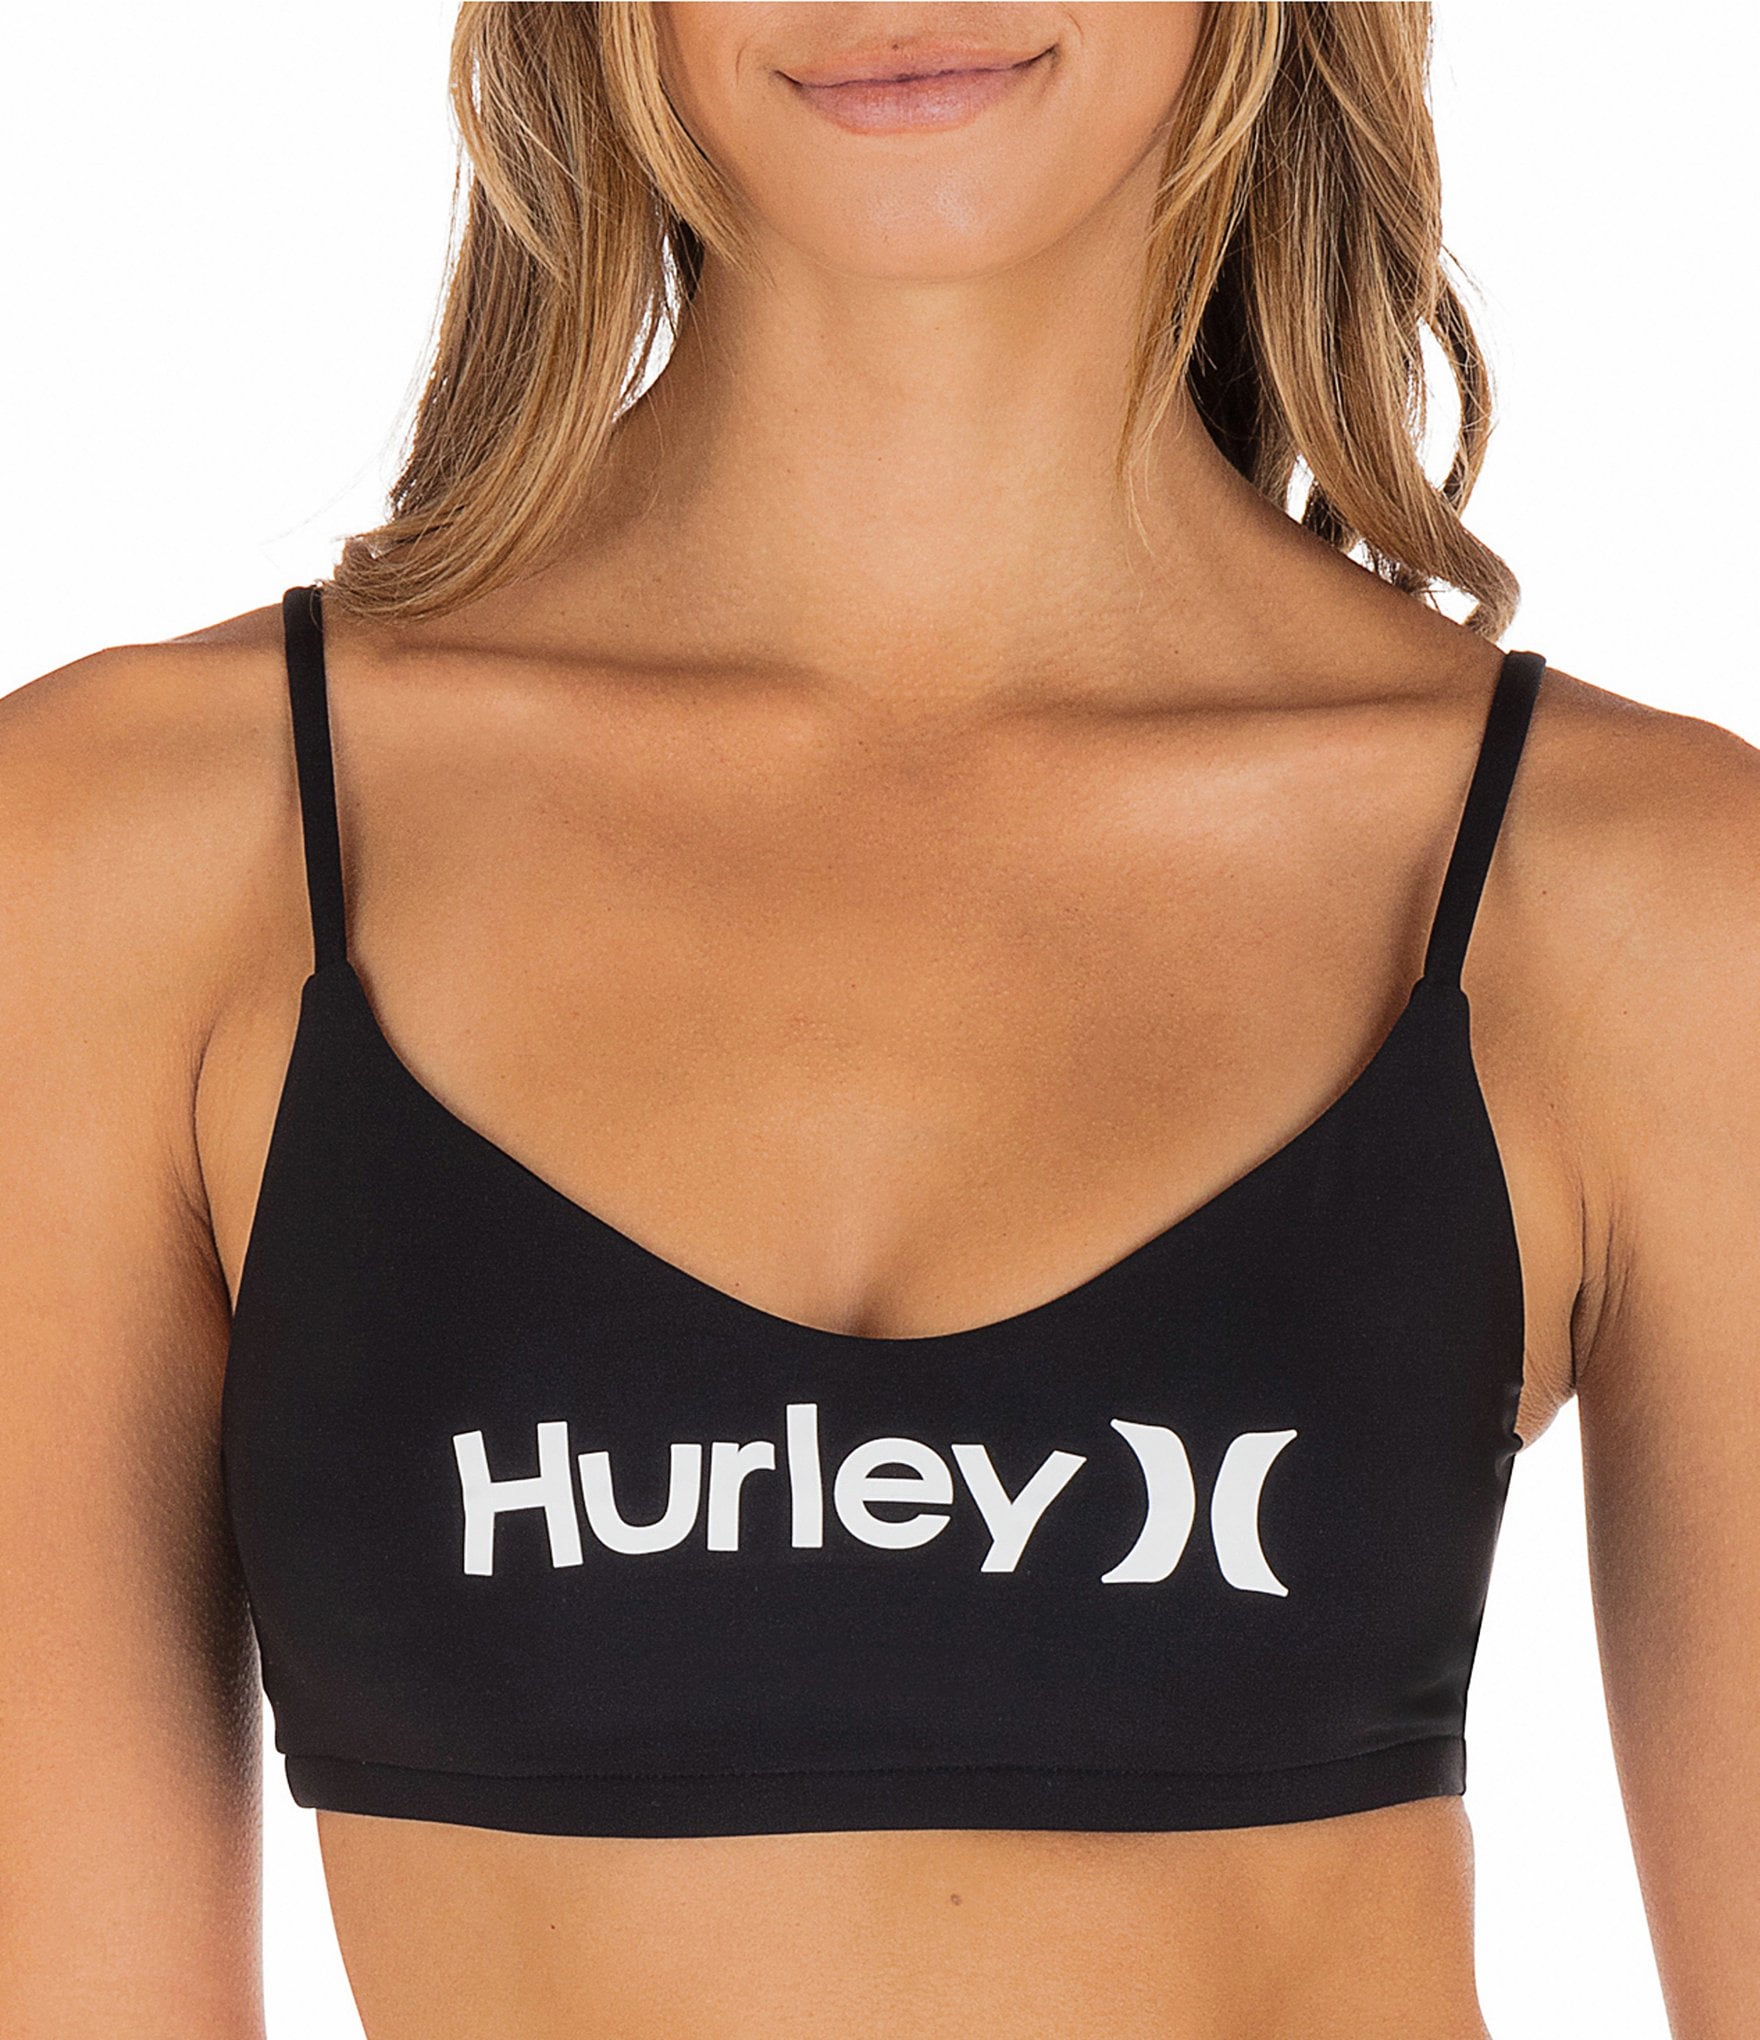 Hurley sports bra